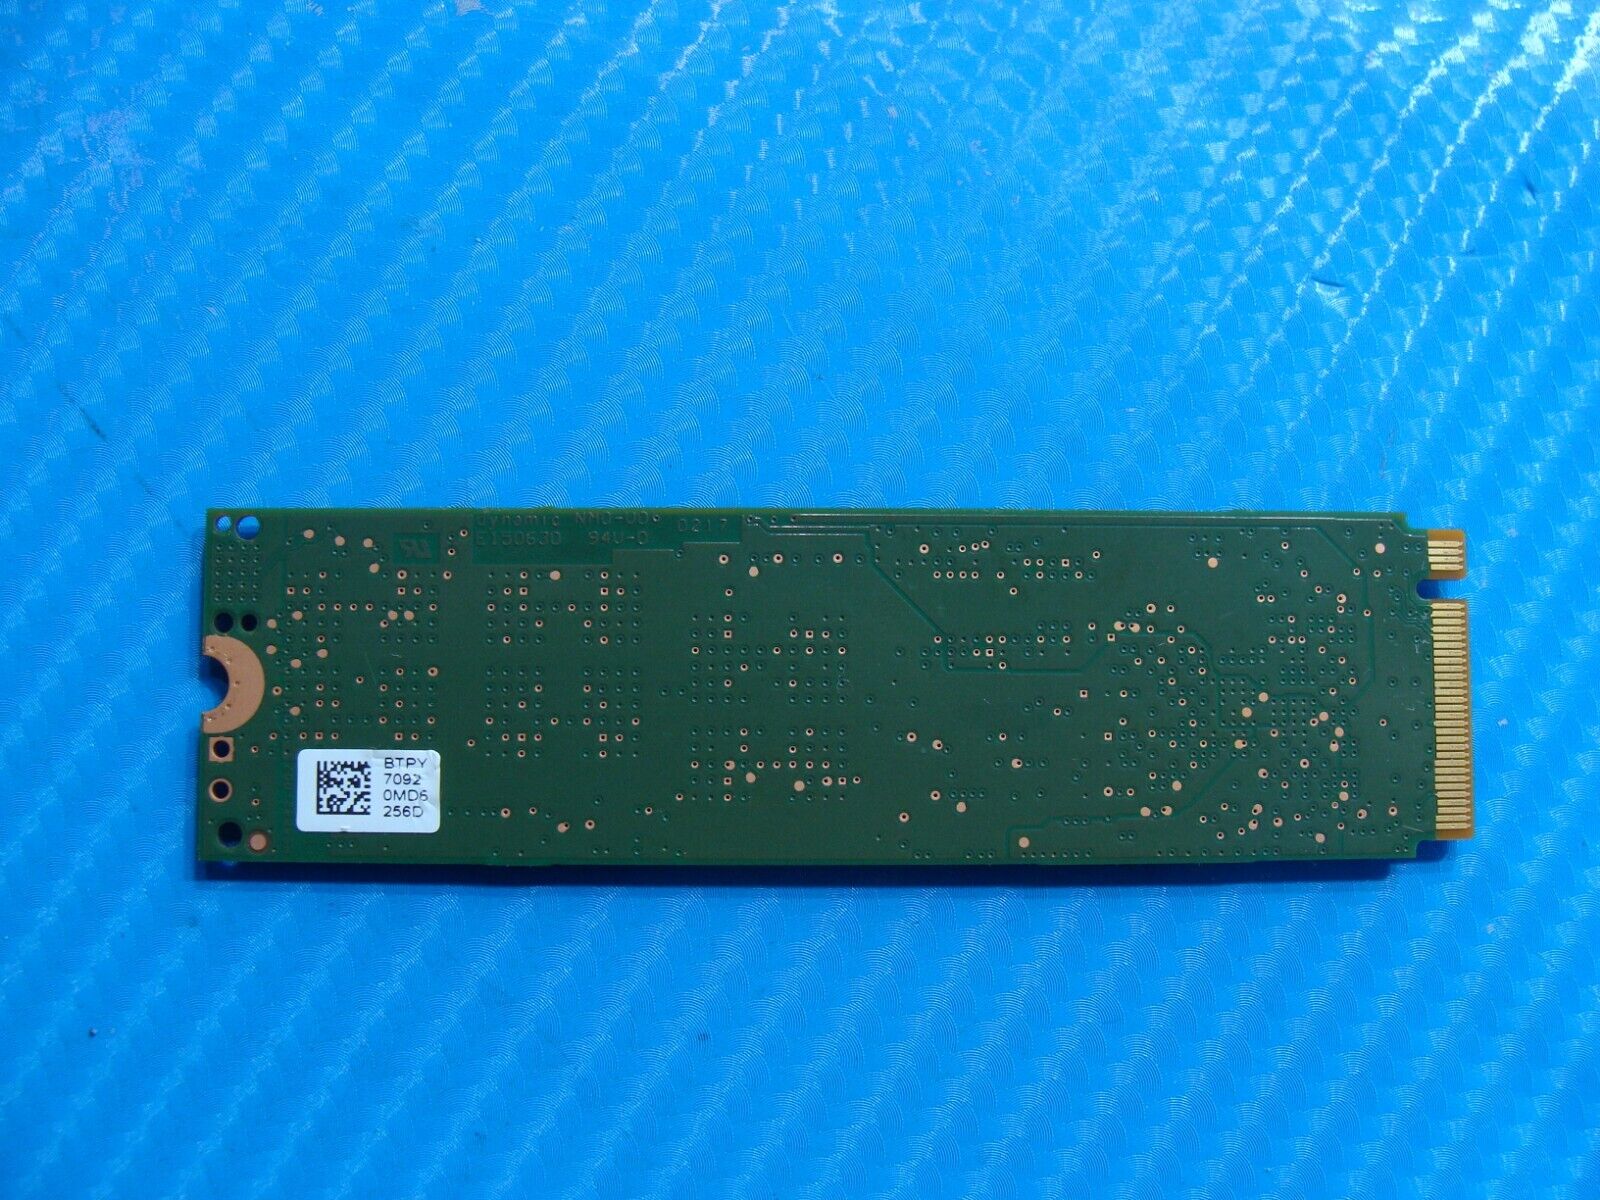 Lenovo X270 Intel 256GB NVMe M.2 Solid State Drive SSDPEKKF256G7L 00UP433